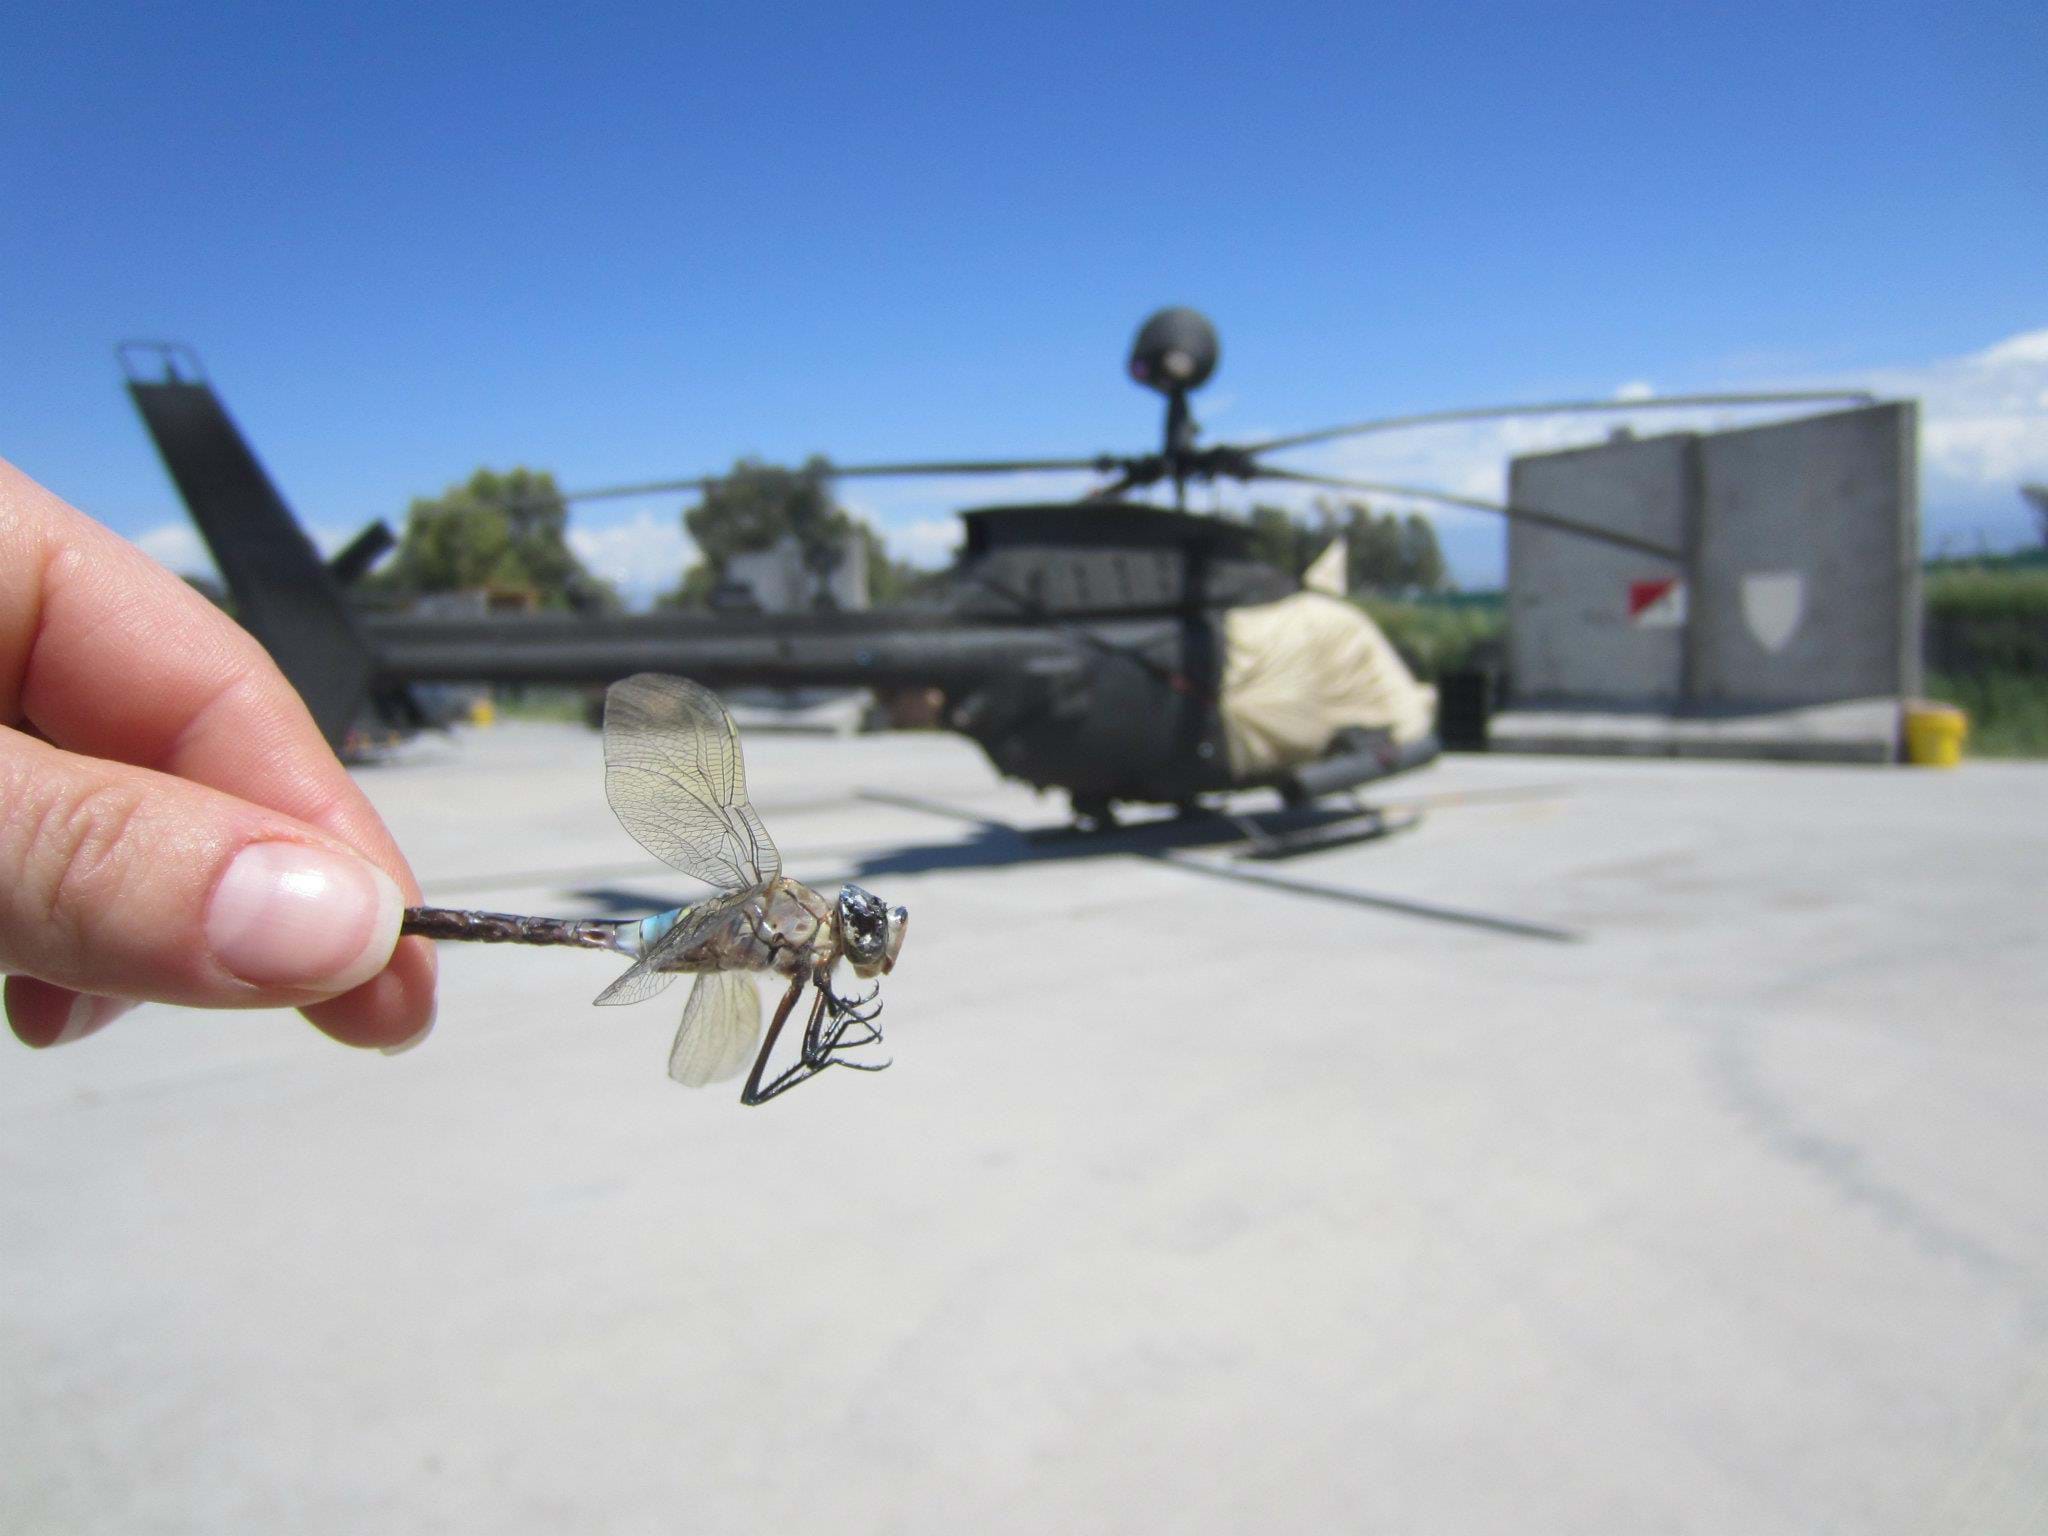 OH-58 Kiowa and a dragonfly